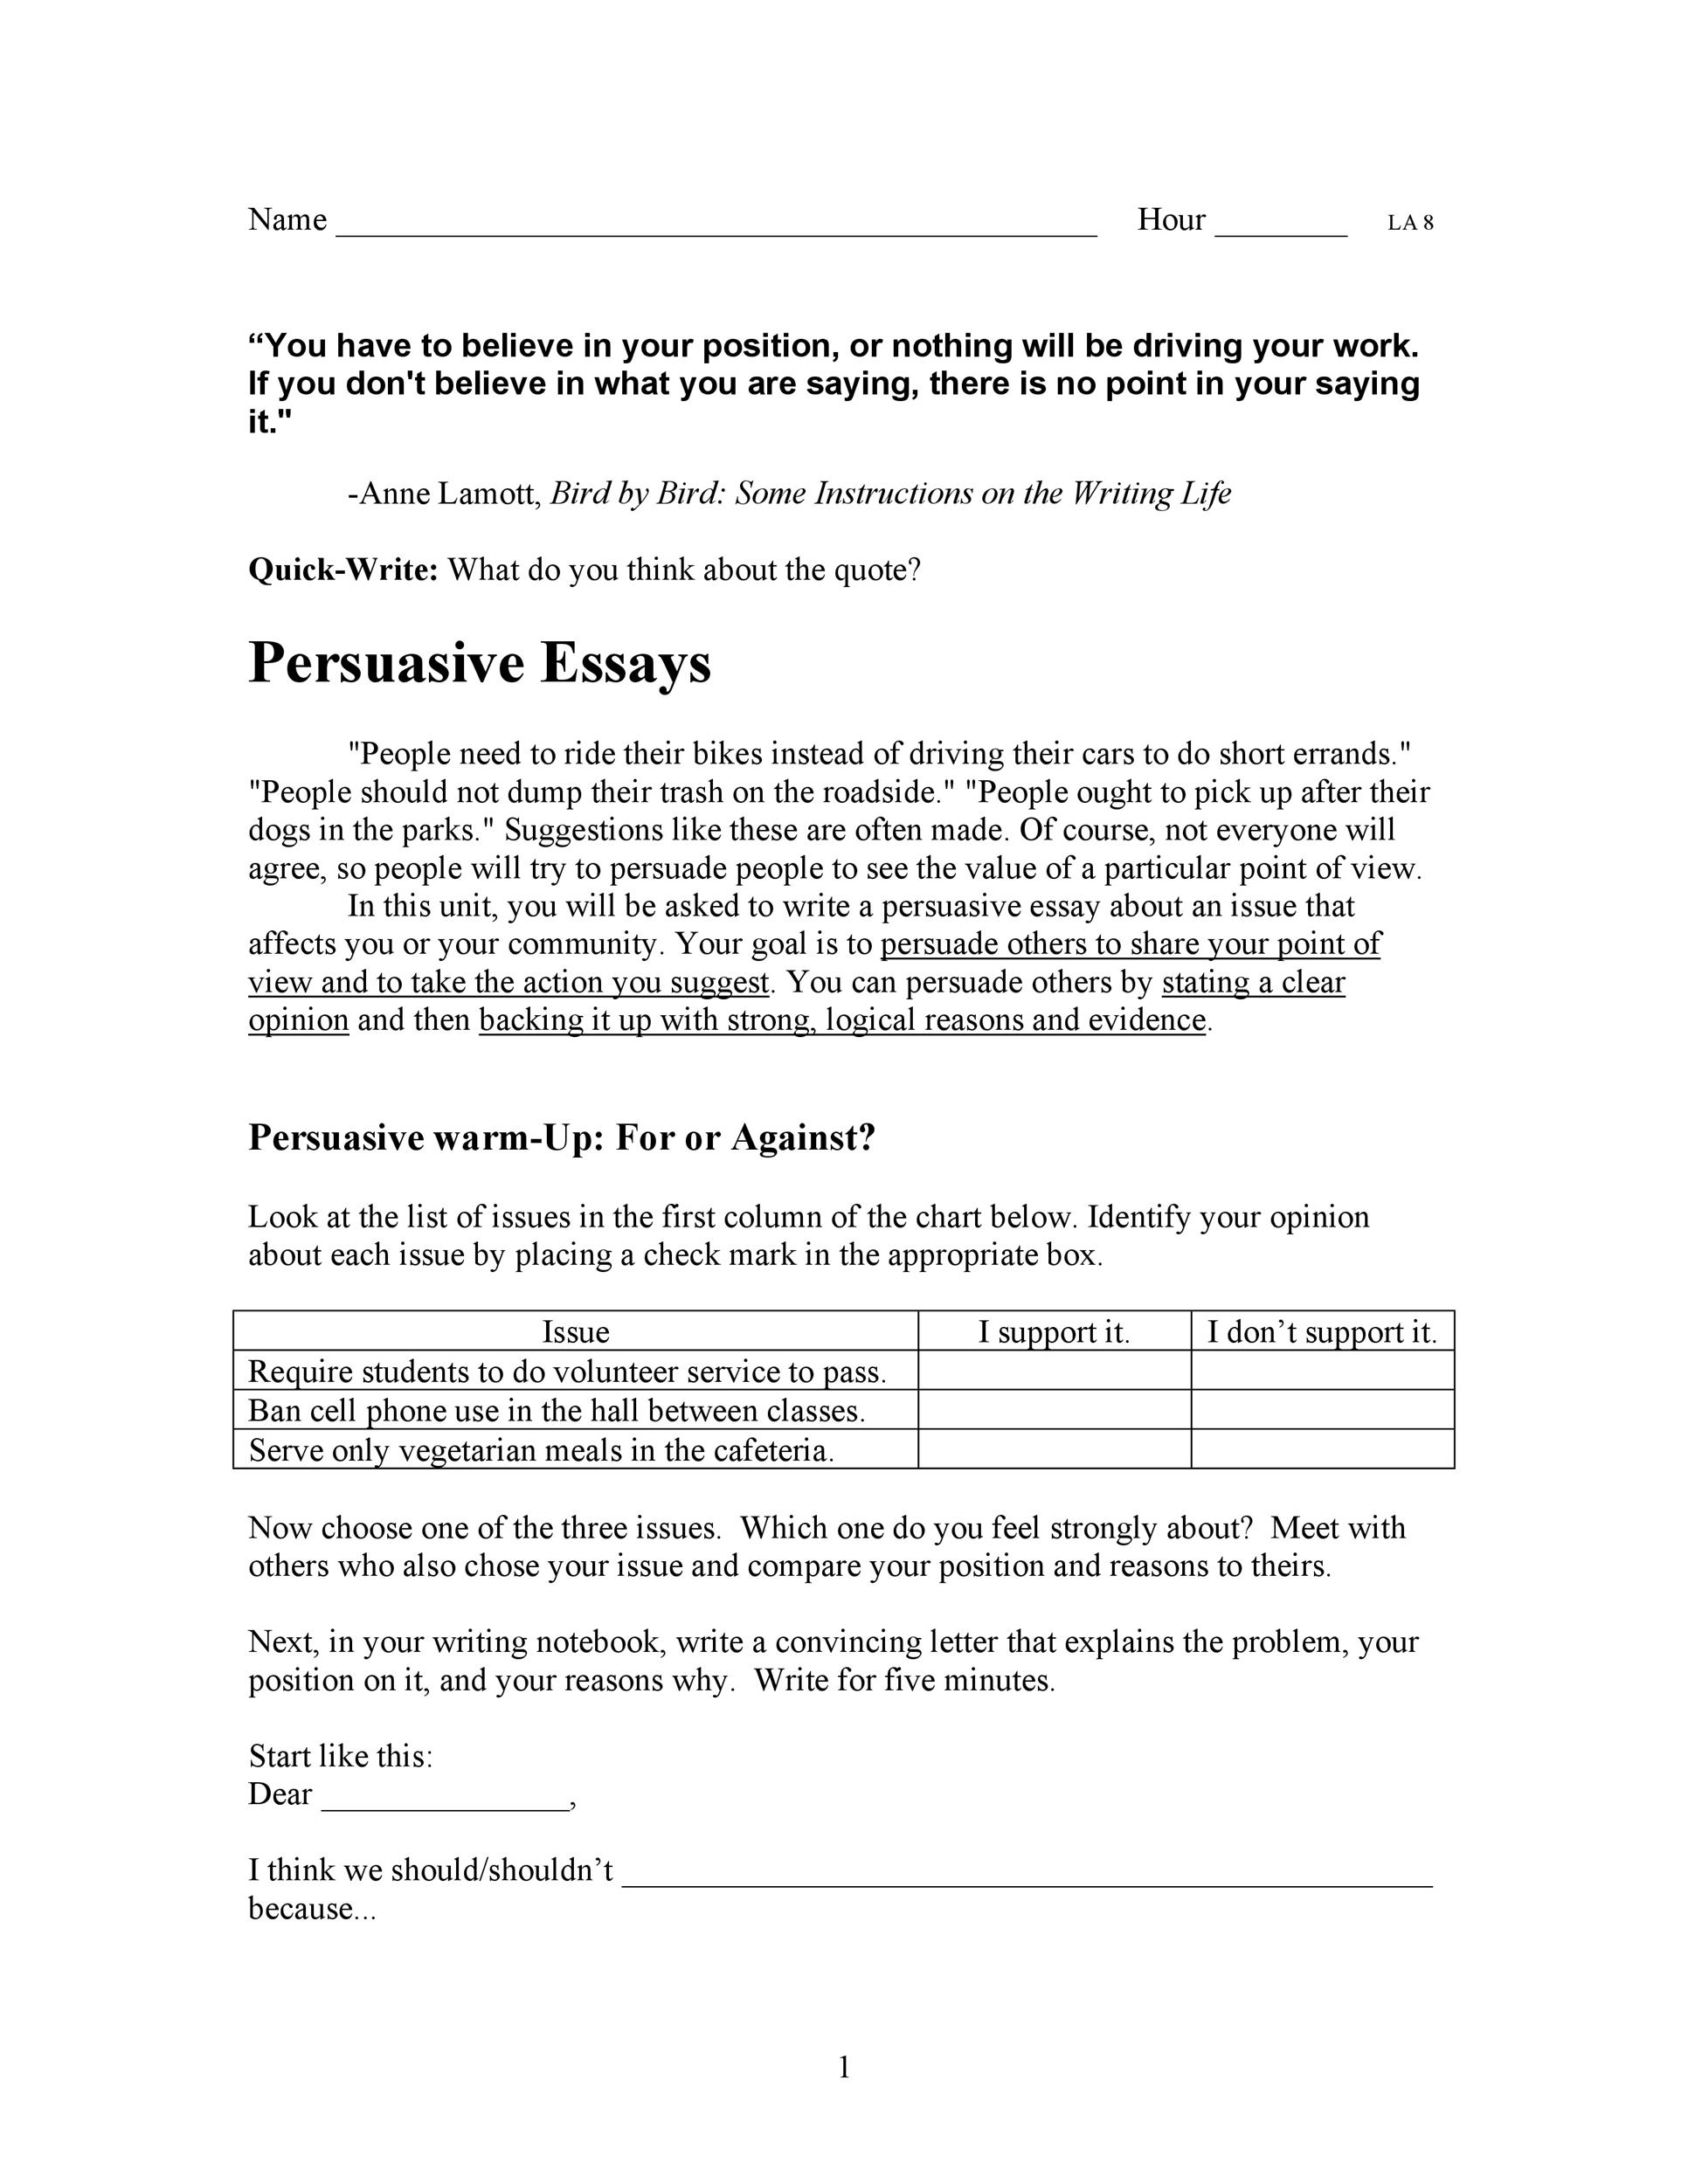 Free persuasive essay example 25